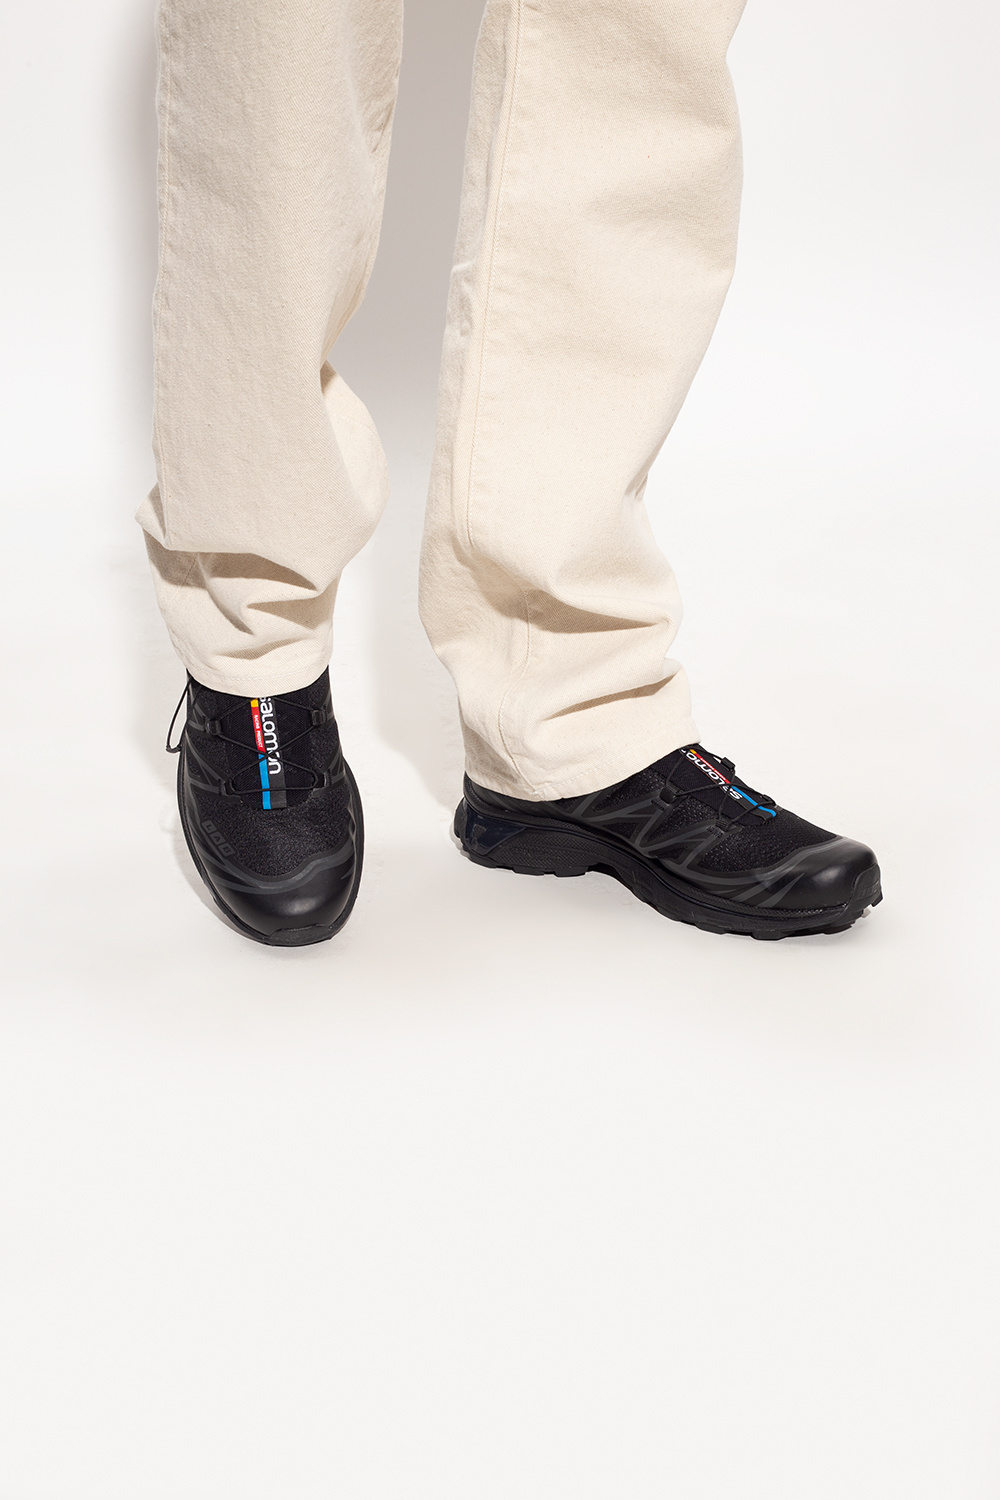 Salomon 'XT-6' sneakers | Men's Shoes | Vitkac